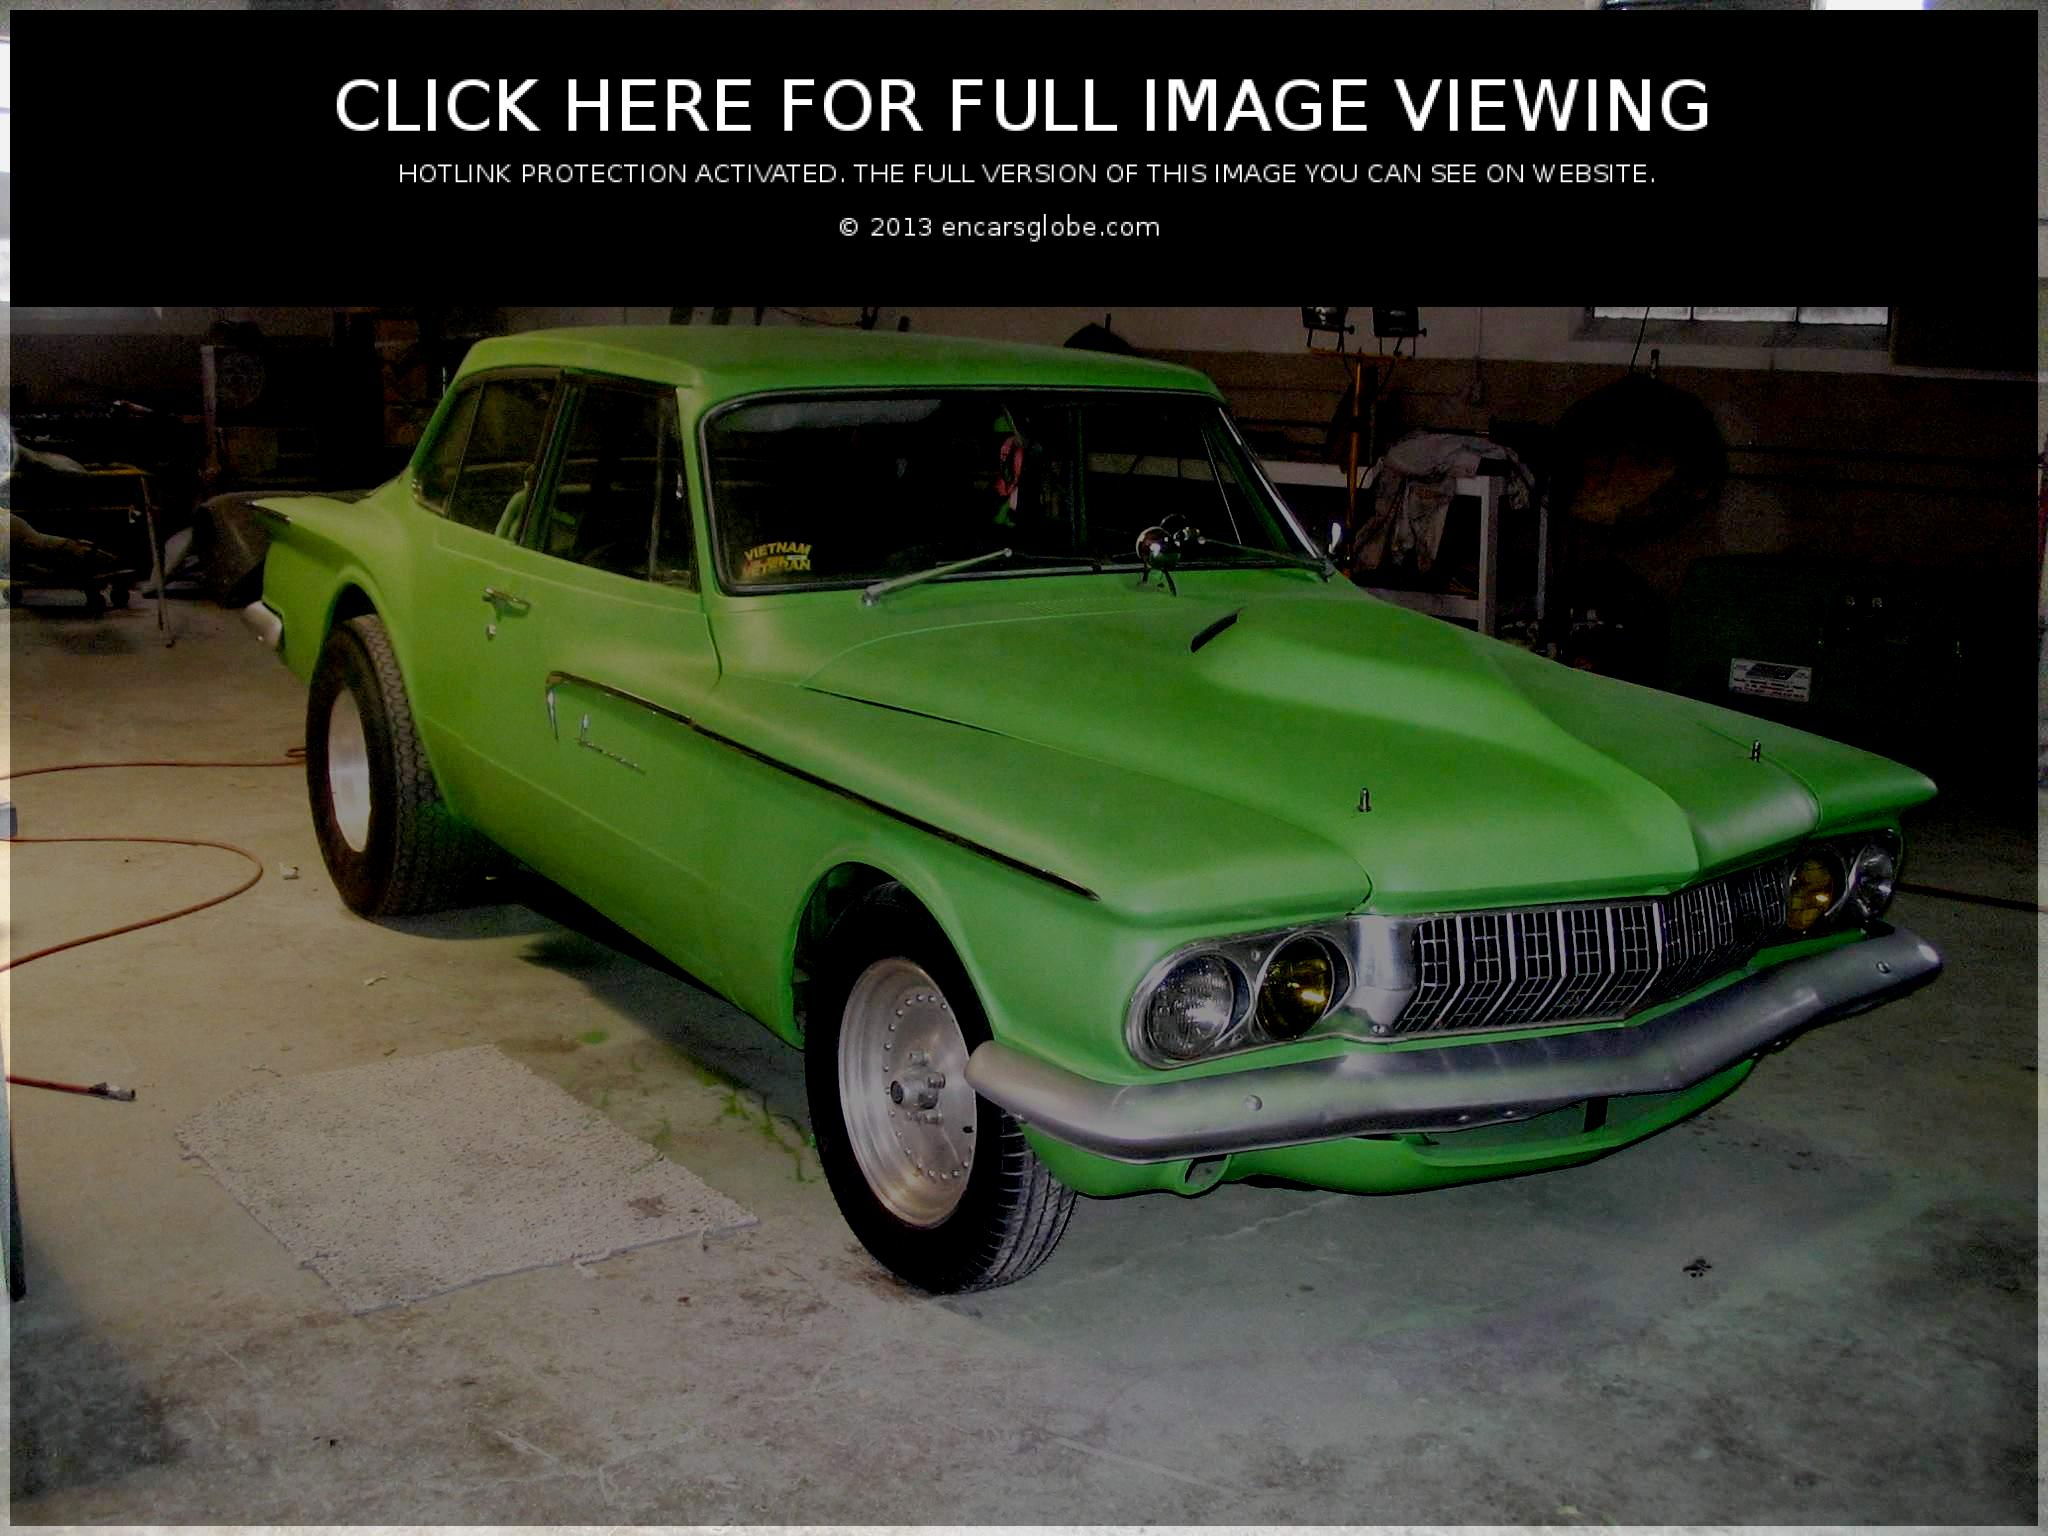 Dodge Lancer: Description of the model, photo gallery ...